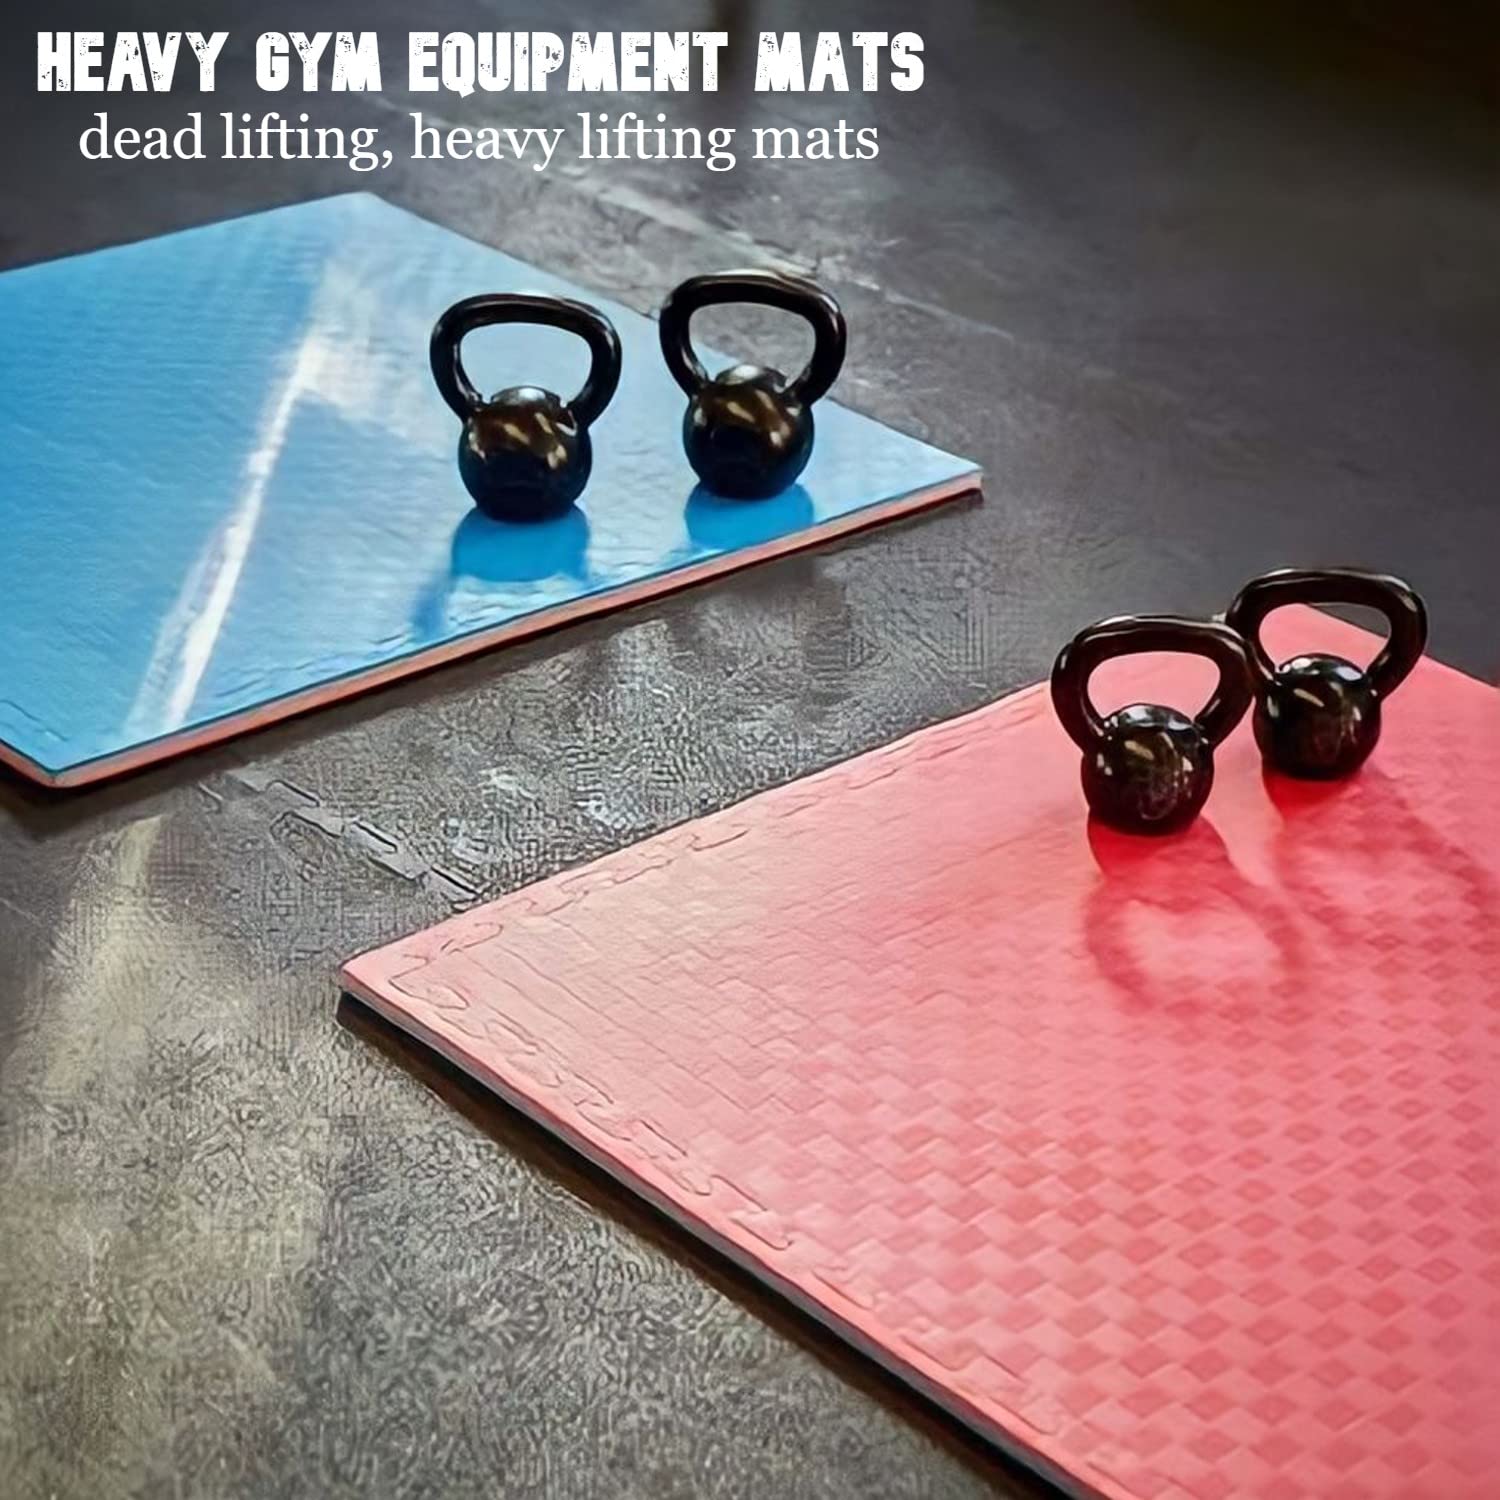 Nasmodo 105x105cm 2-4 ps 1 Inch/25mm Gym Floor mat for Heavy Workout,Gym Equipment mat Interlocking Eva Foam Flooring Rubber Tiles Yoga, Karate, taeknowdo